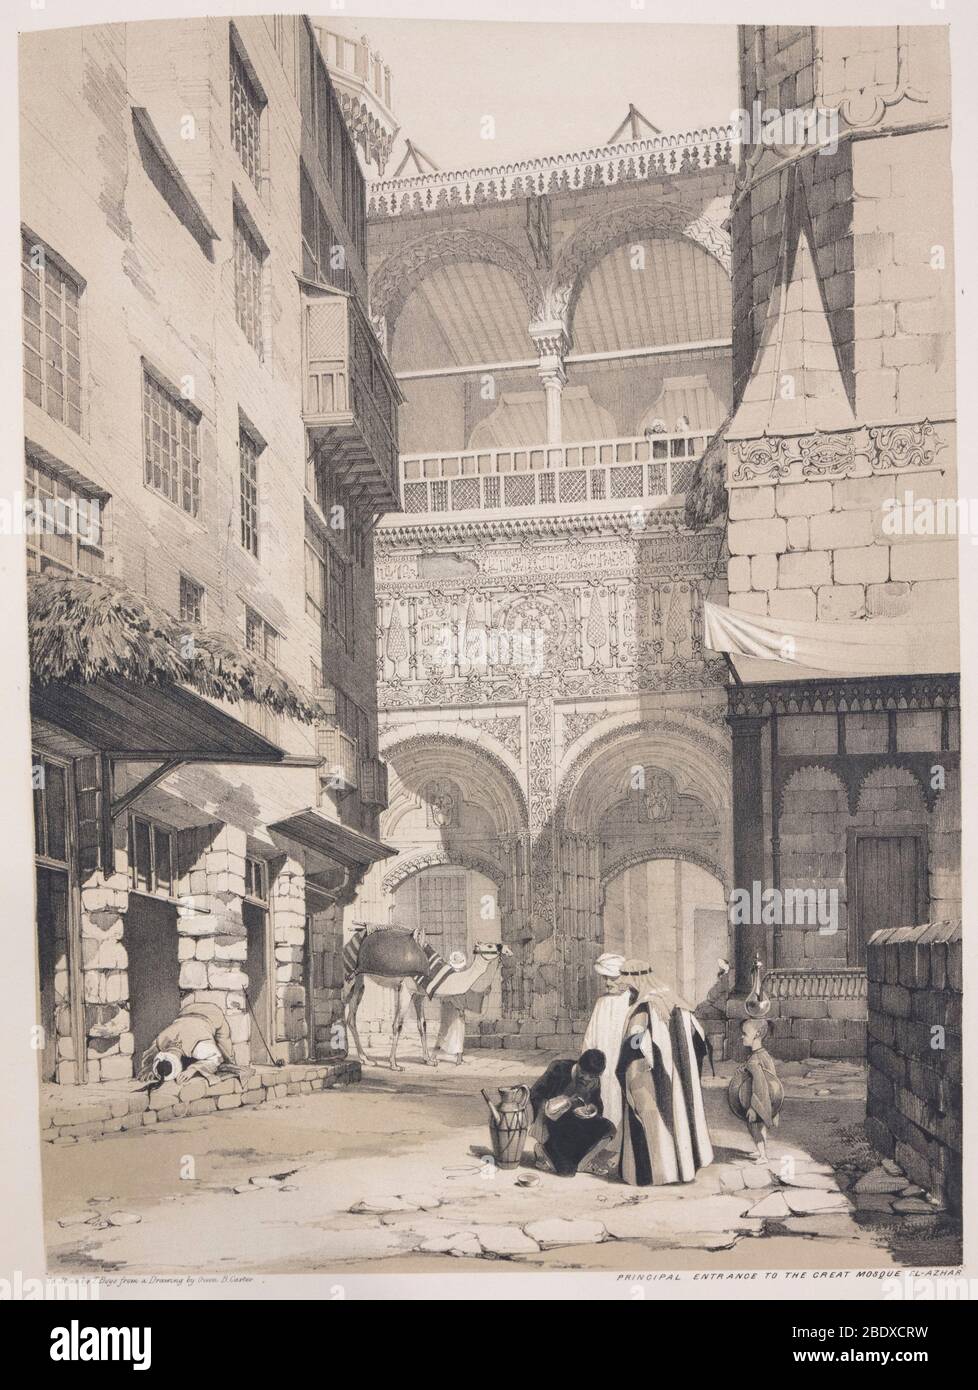 Principal Entrance to the Great Mosque El-Azhar, Robert Hay, Illustrations of Cairo, London, 1840 Stock Photo